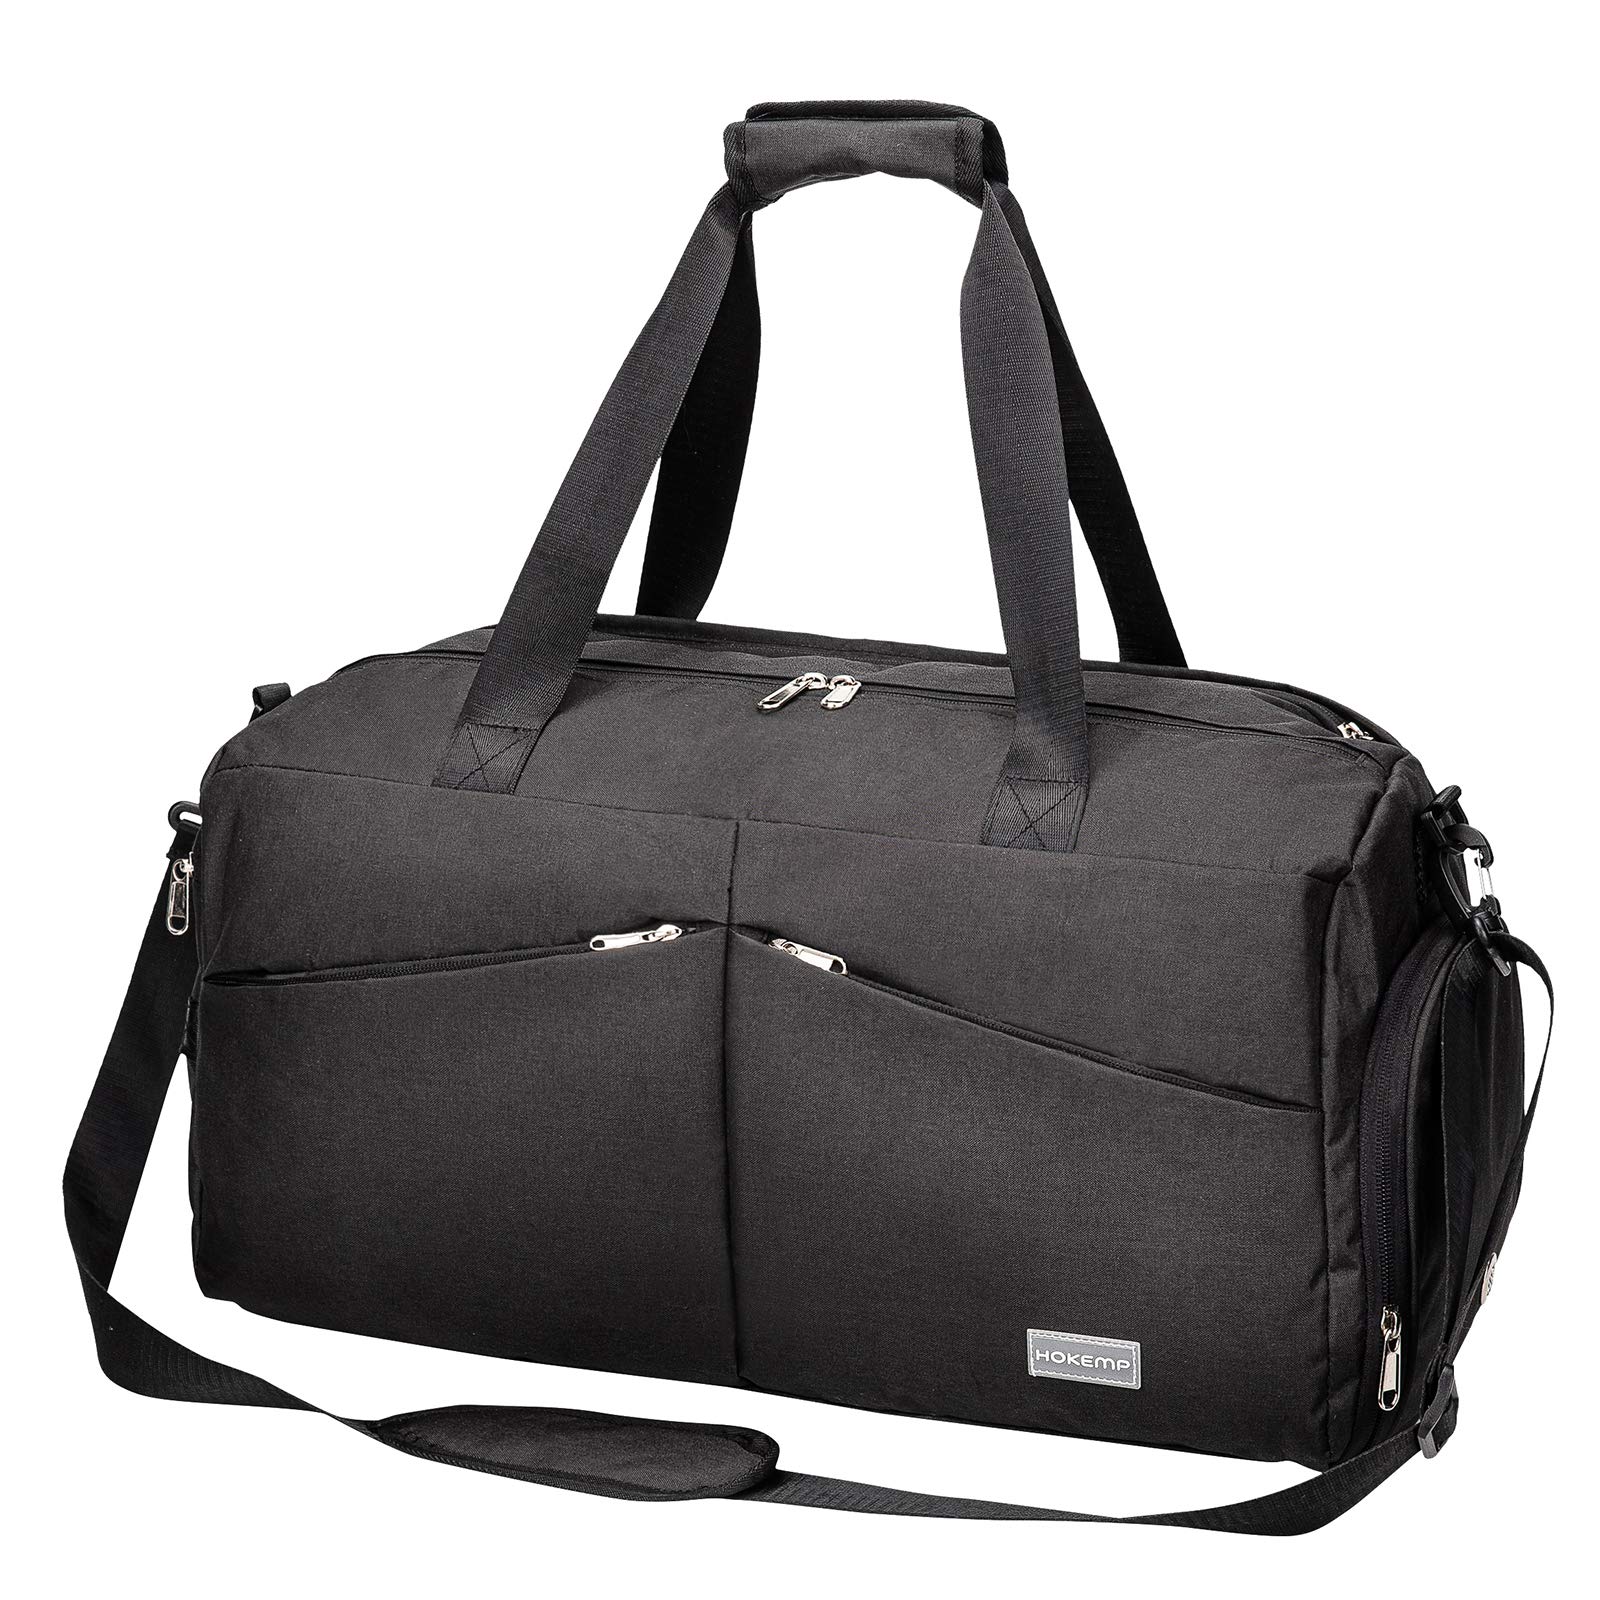 Sports Gym Bag Travel Duffel Weekender Bag Review - LightBagTravel.com